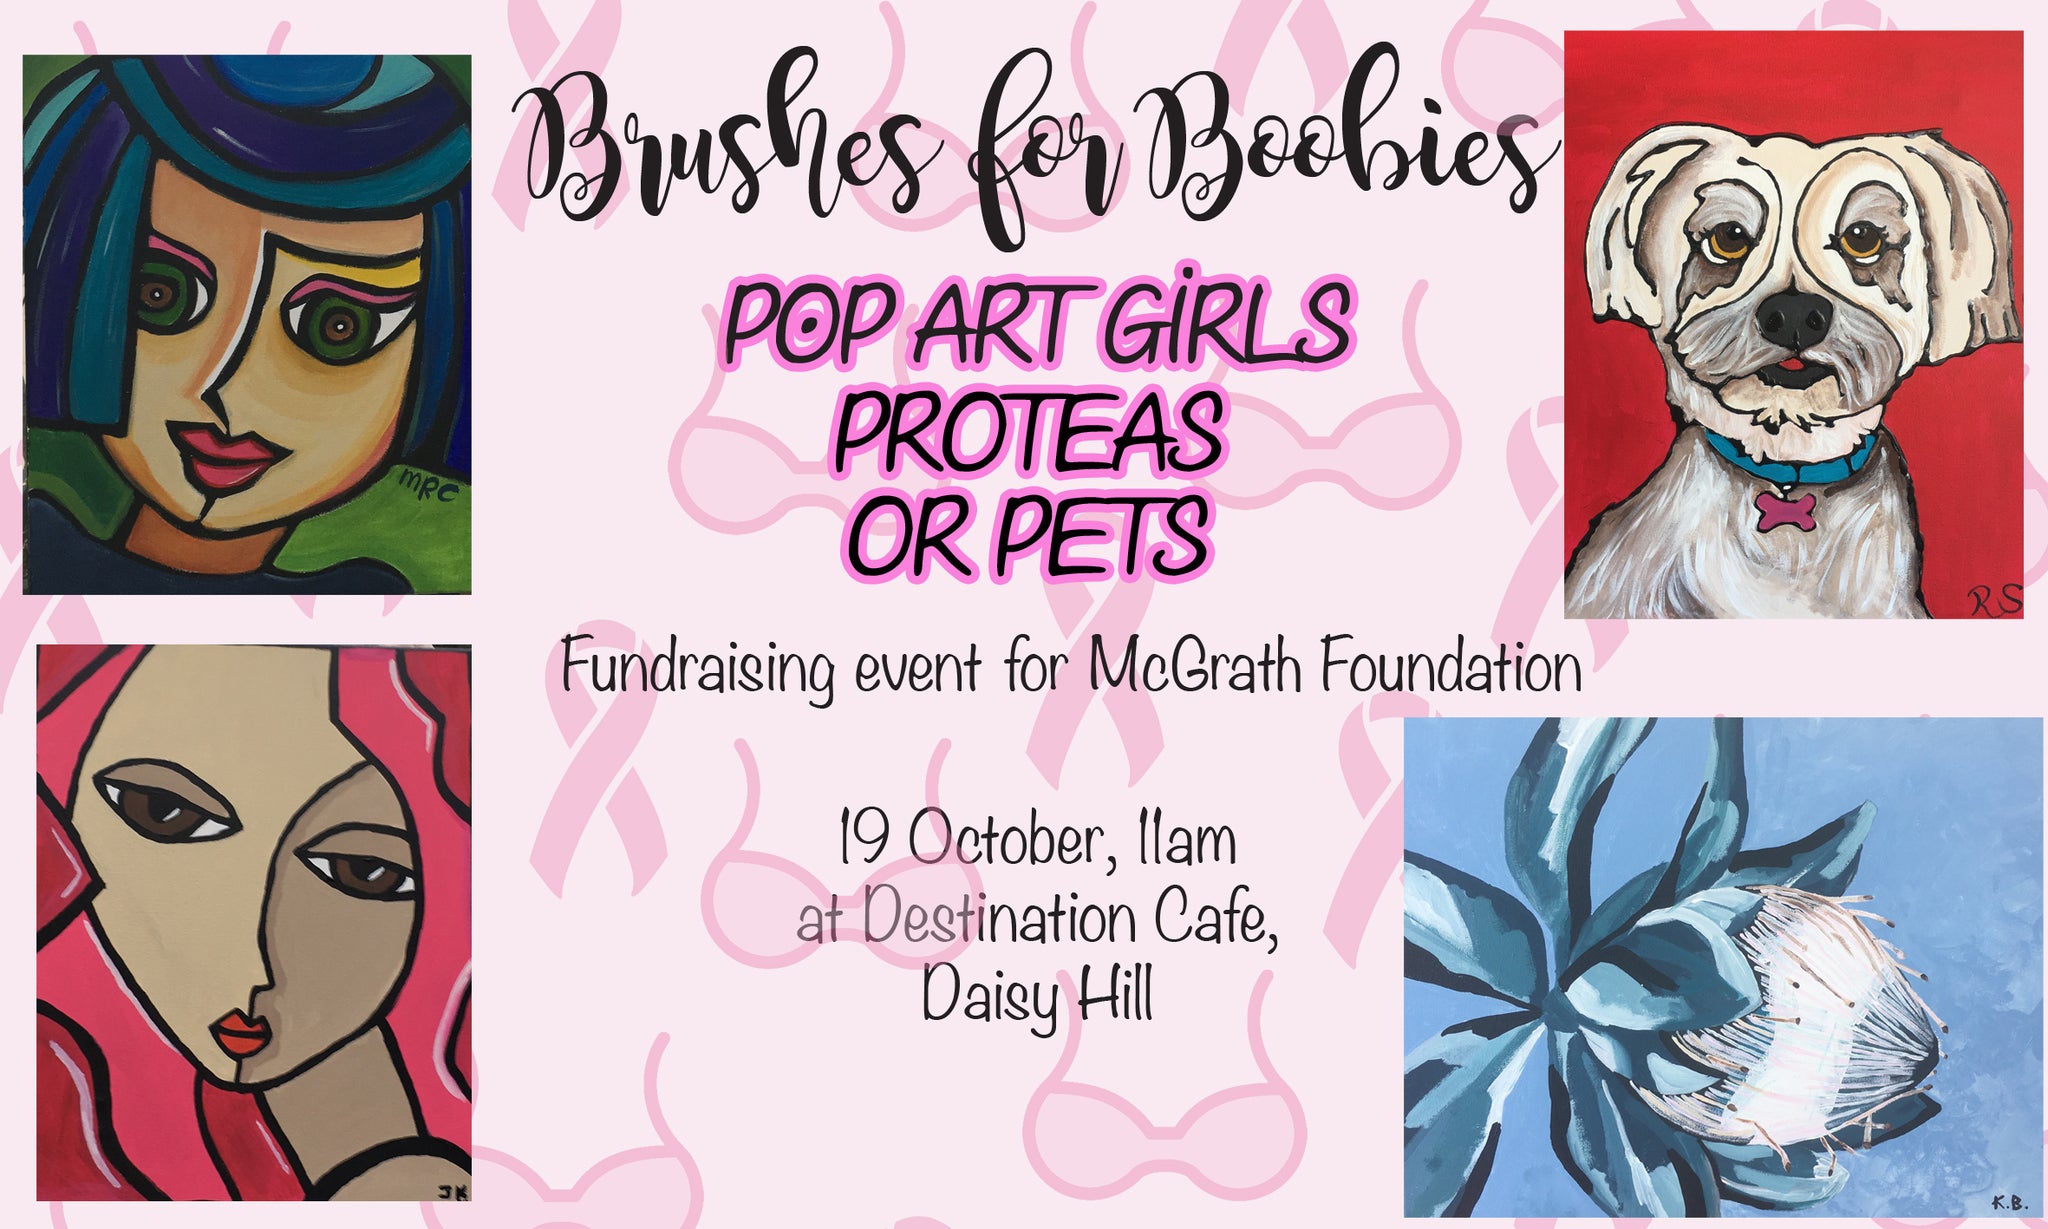 Brushes for Boobies - Destination Cafe - 19 Oct, 2019